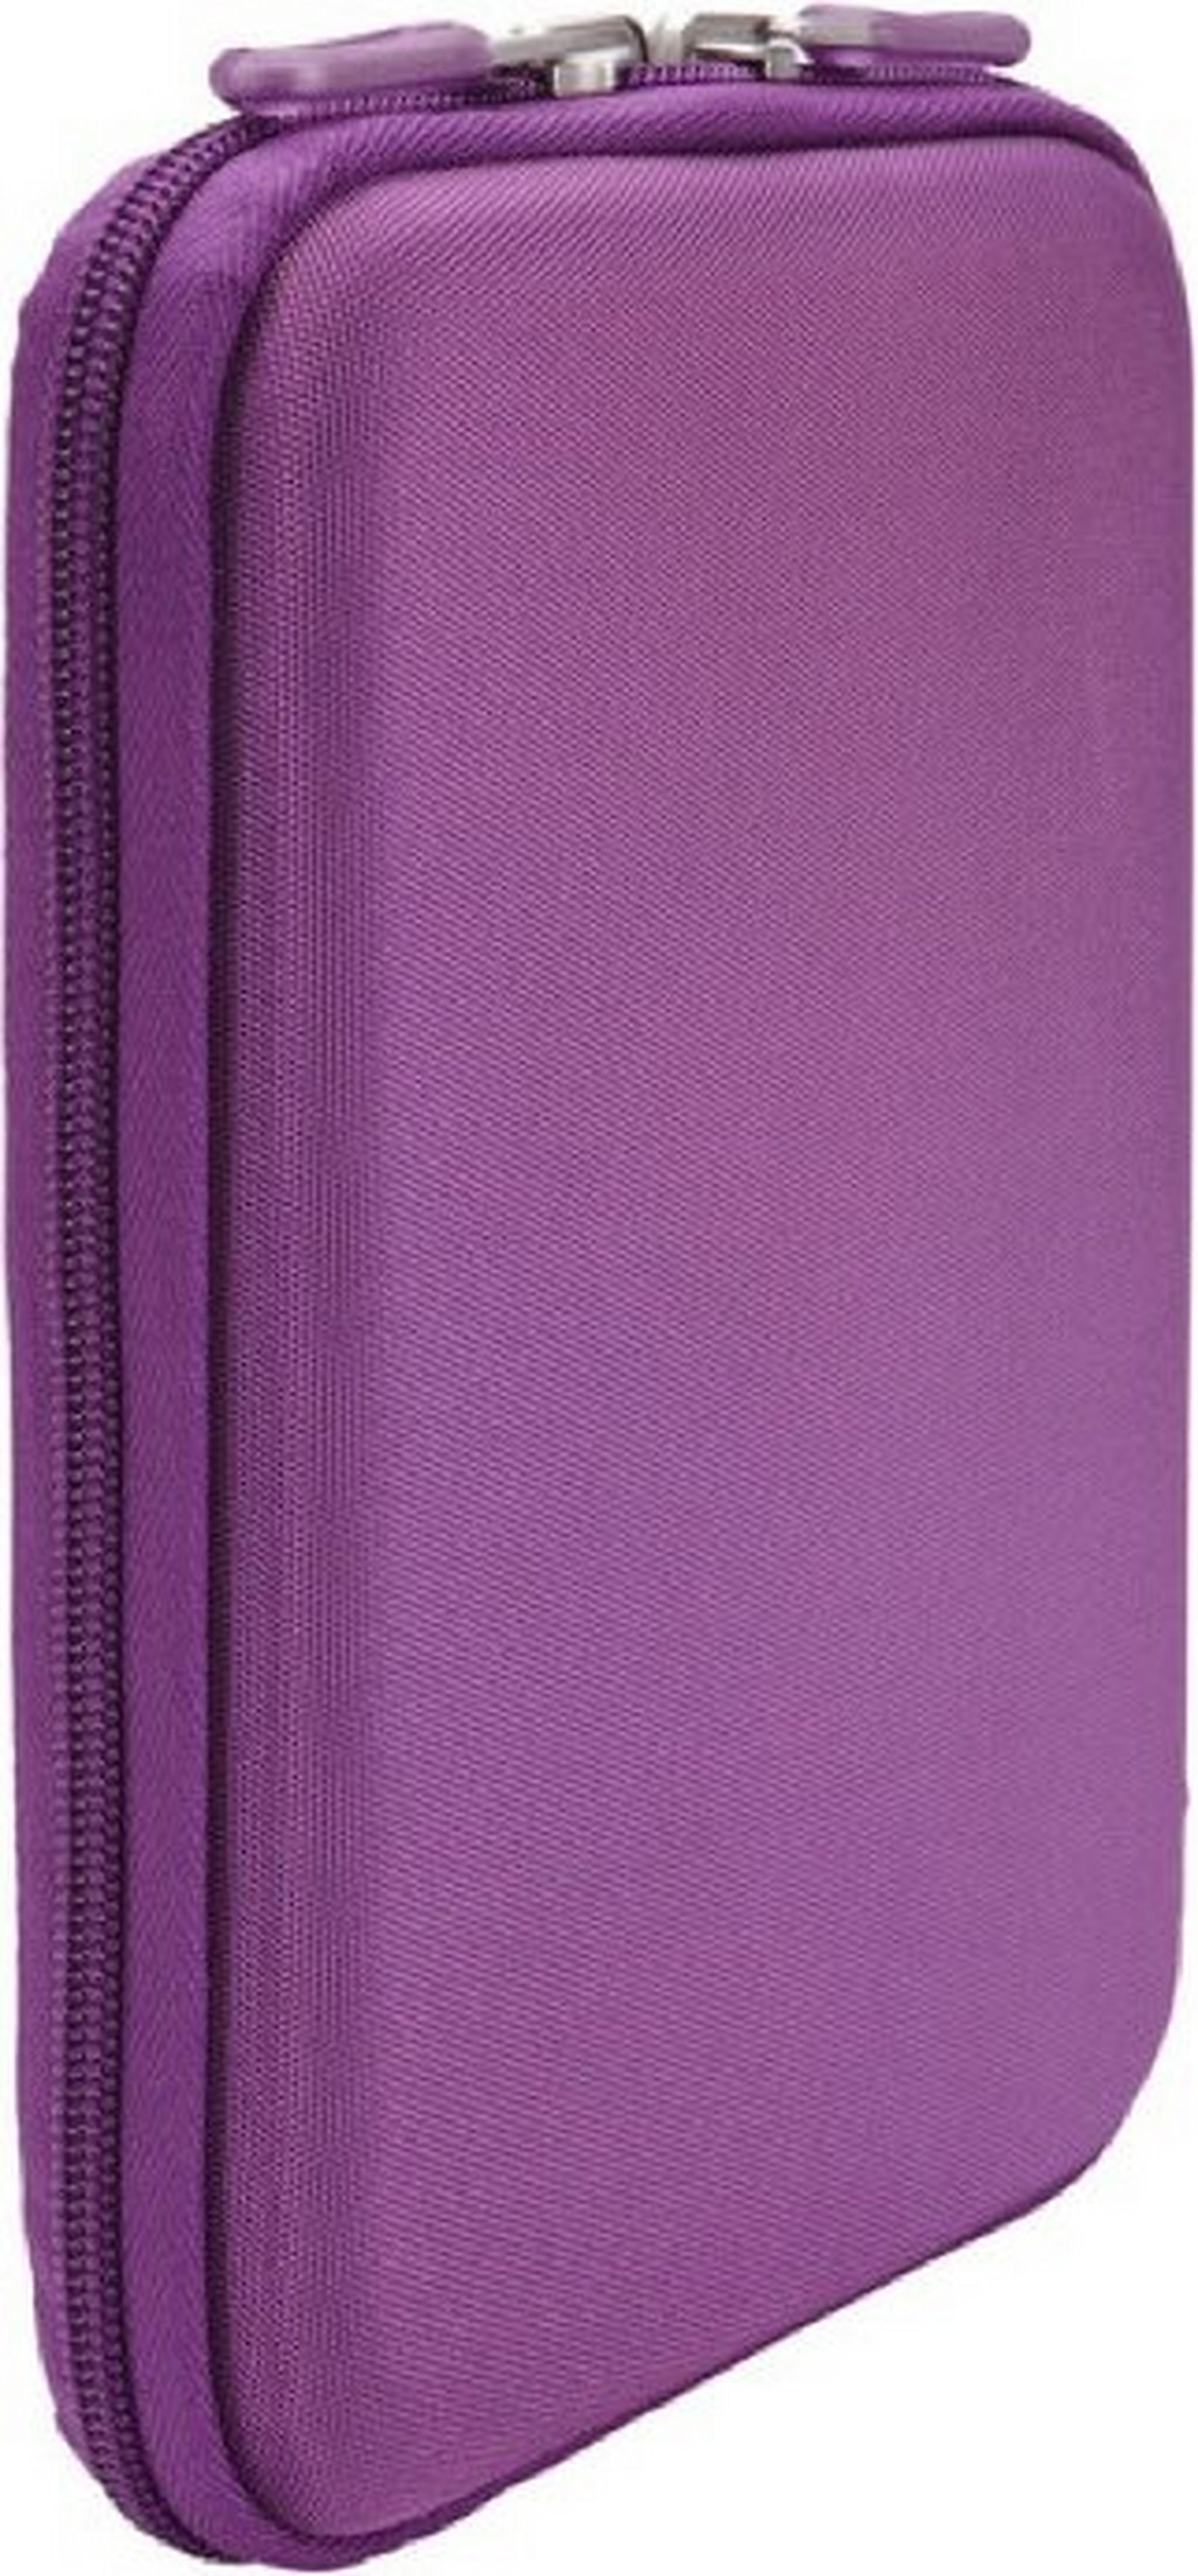 Case Logic 7 Inch Case - Purple